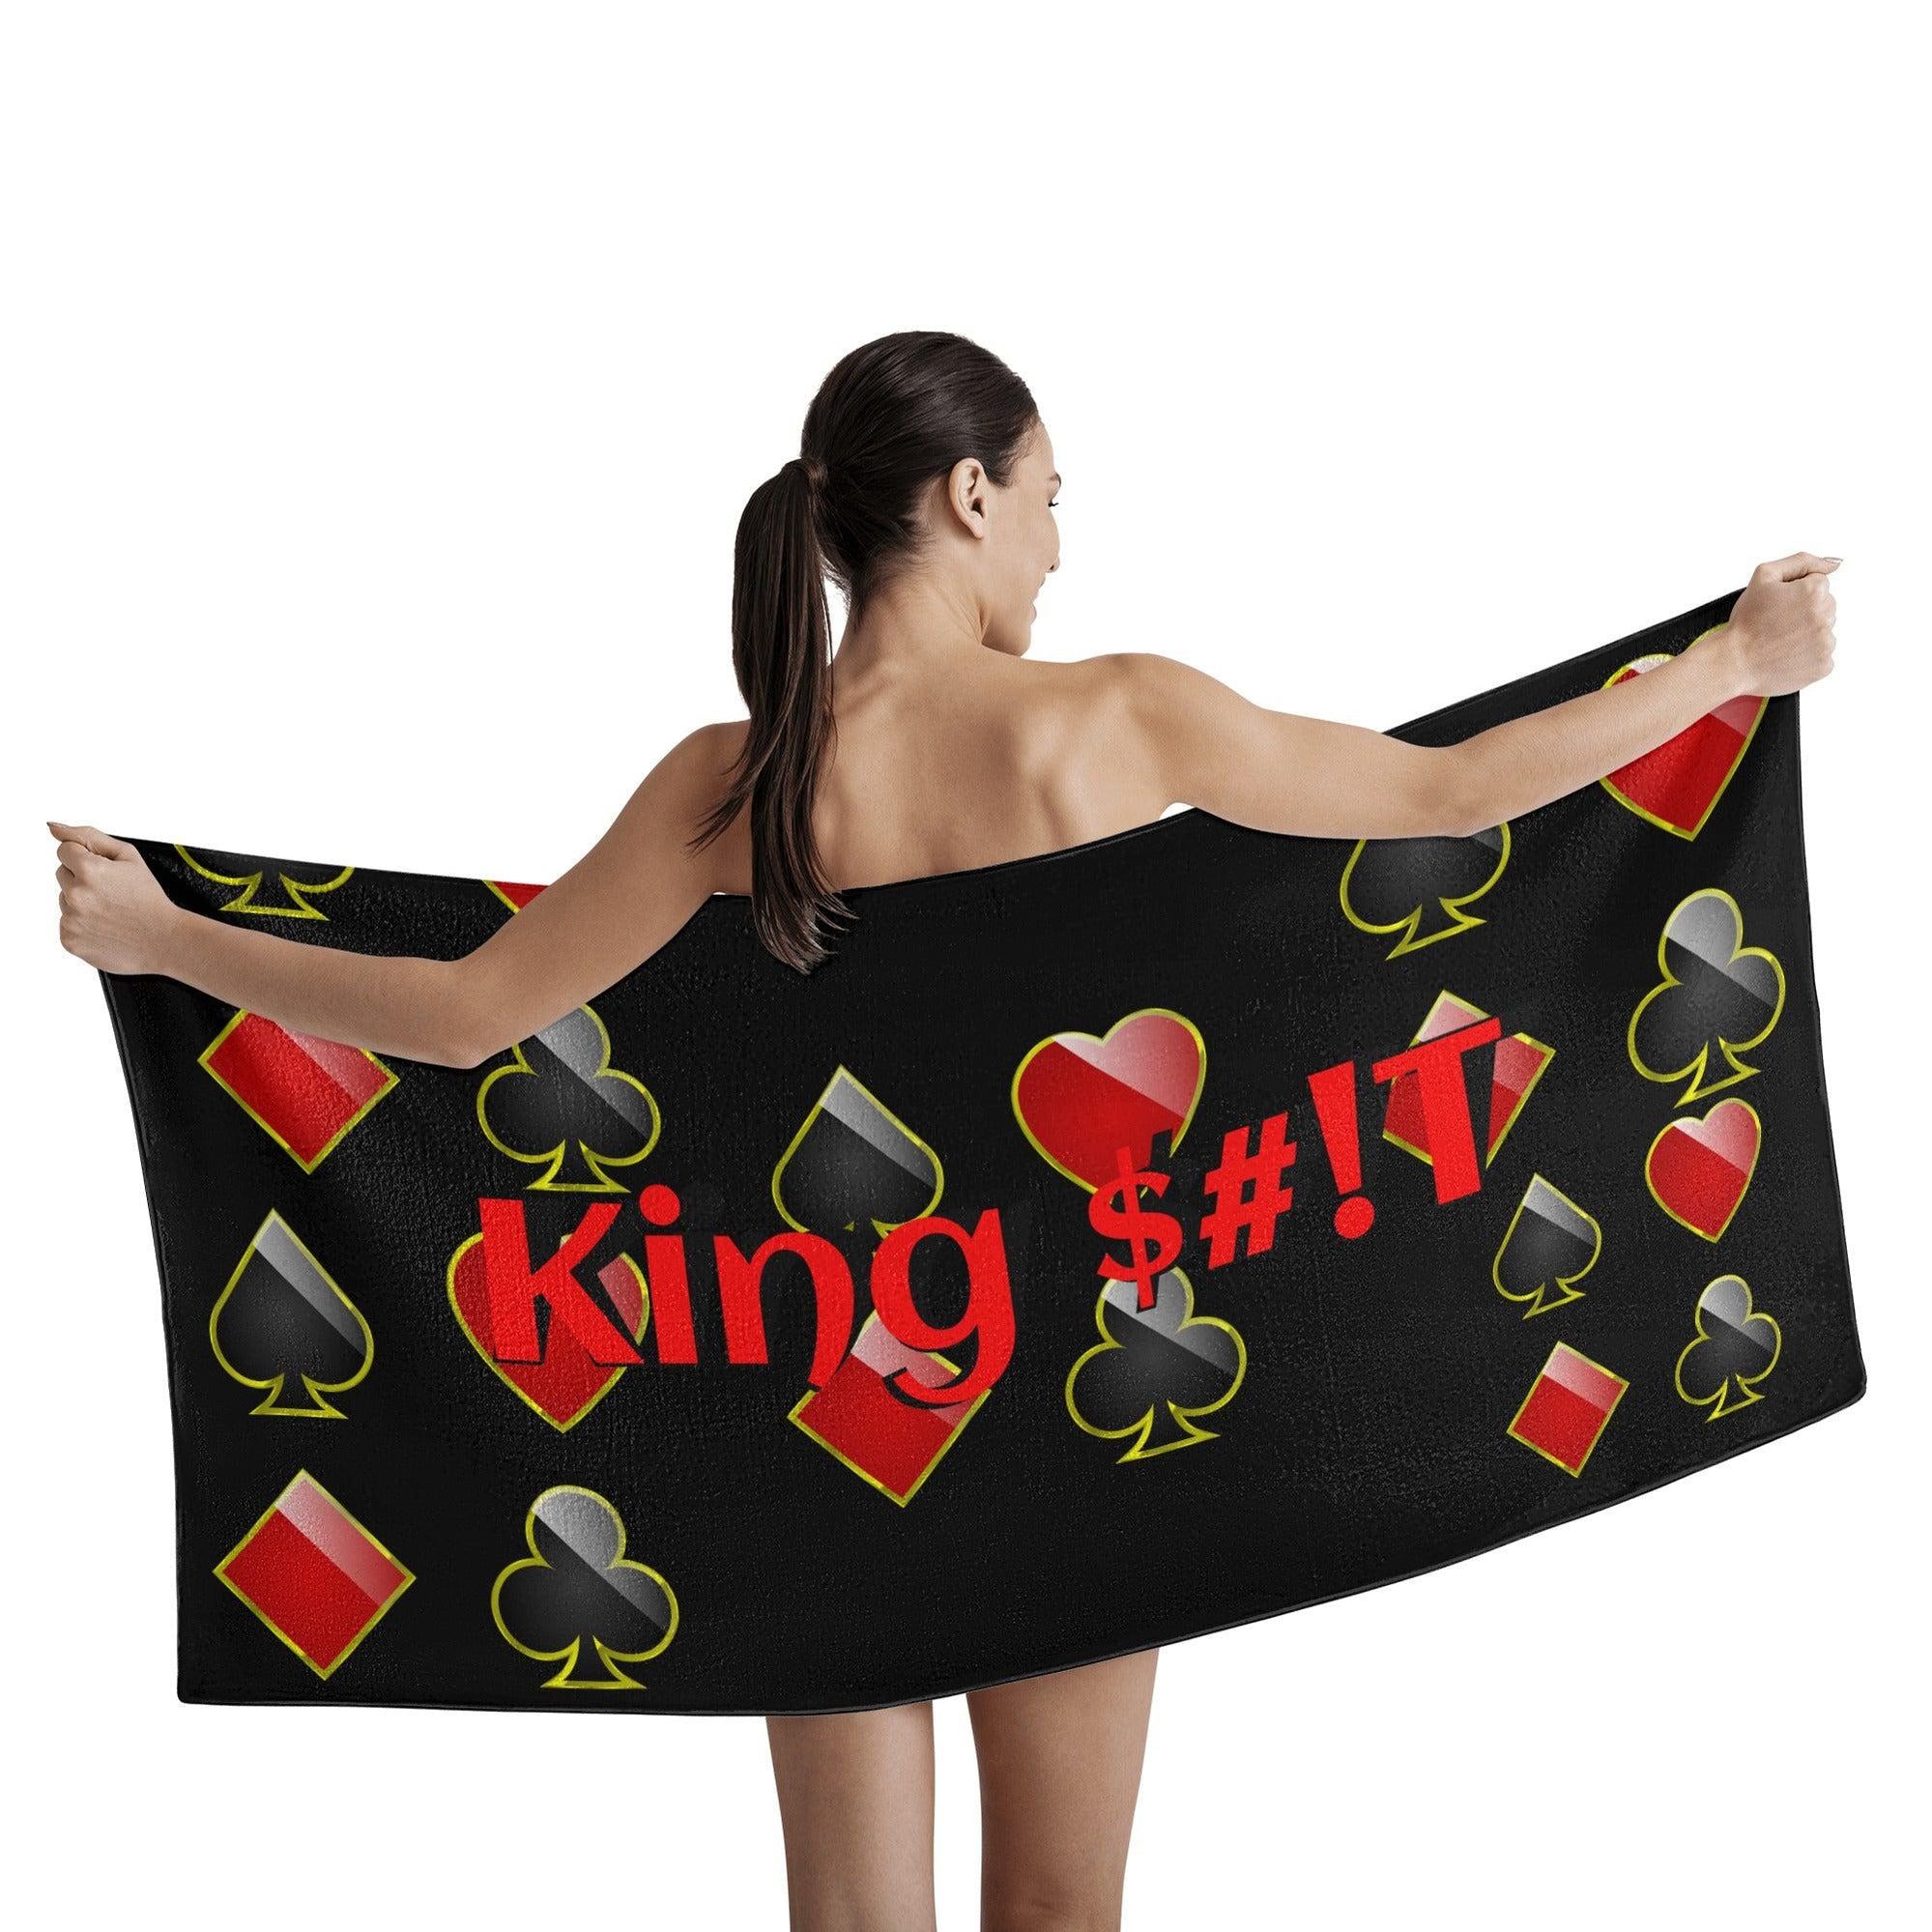 King$h!t Bath Towel - Kanivee Customs